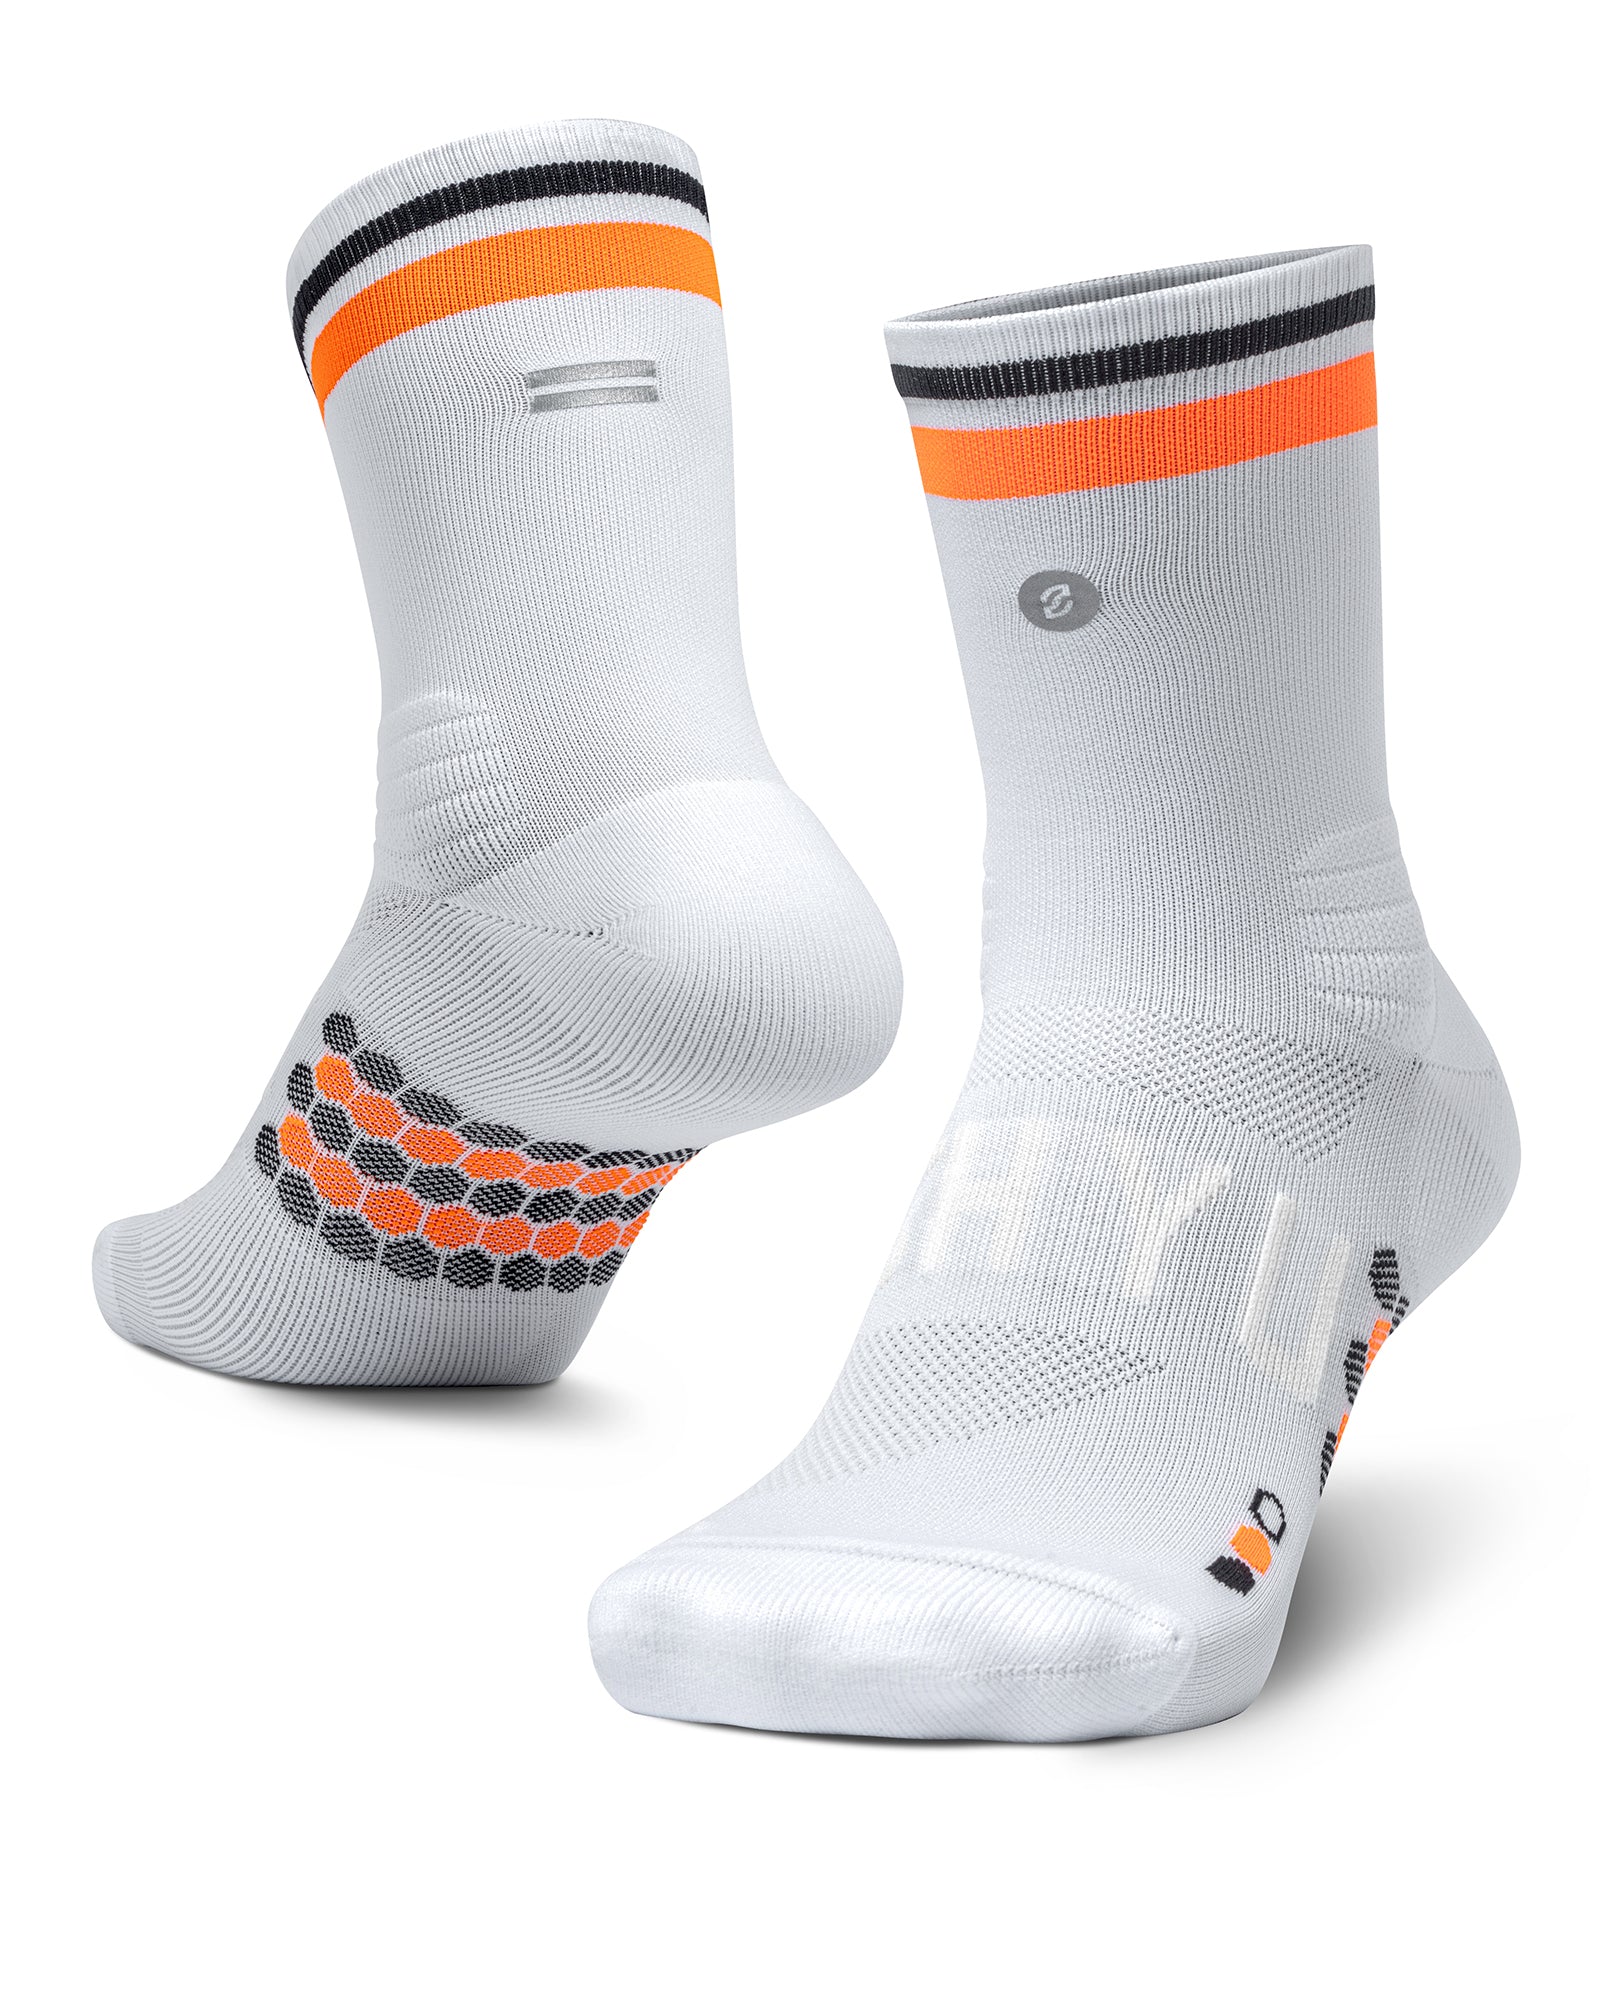 SHYU racing socks - white | orange | black